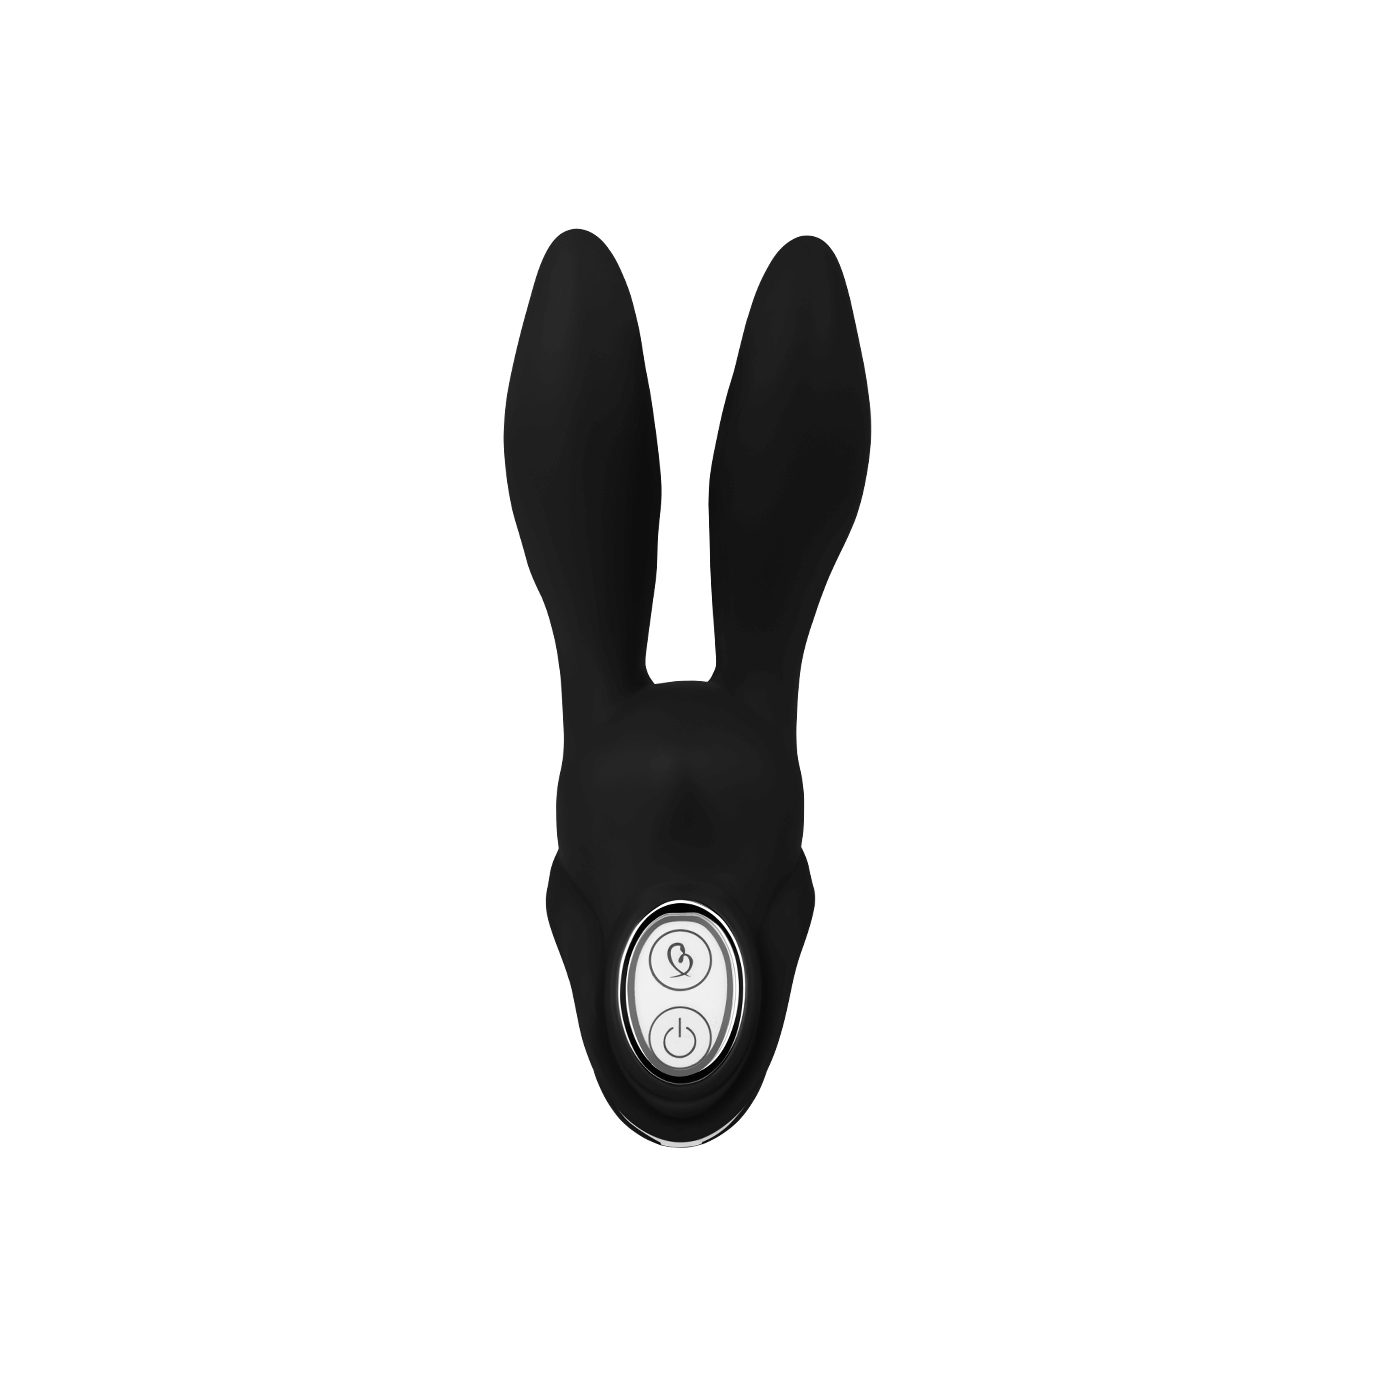 16,5cm, Schwarz "Honey EIS (0-tlg) Vibrationsprogramme, Klitoris-Stimulator EIS Bunny", Silikon-Vibrator 7